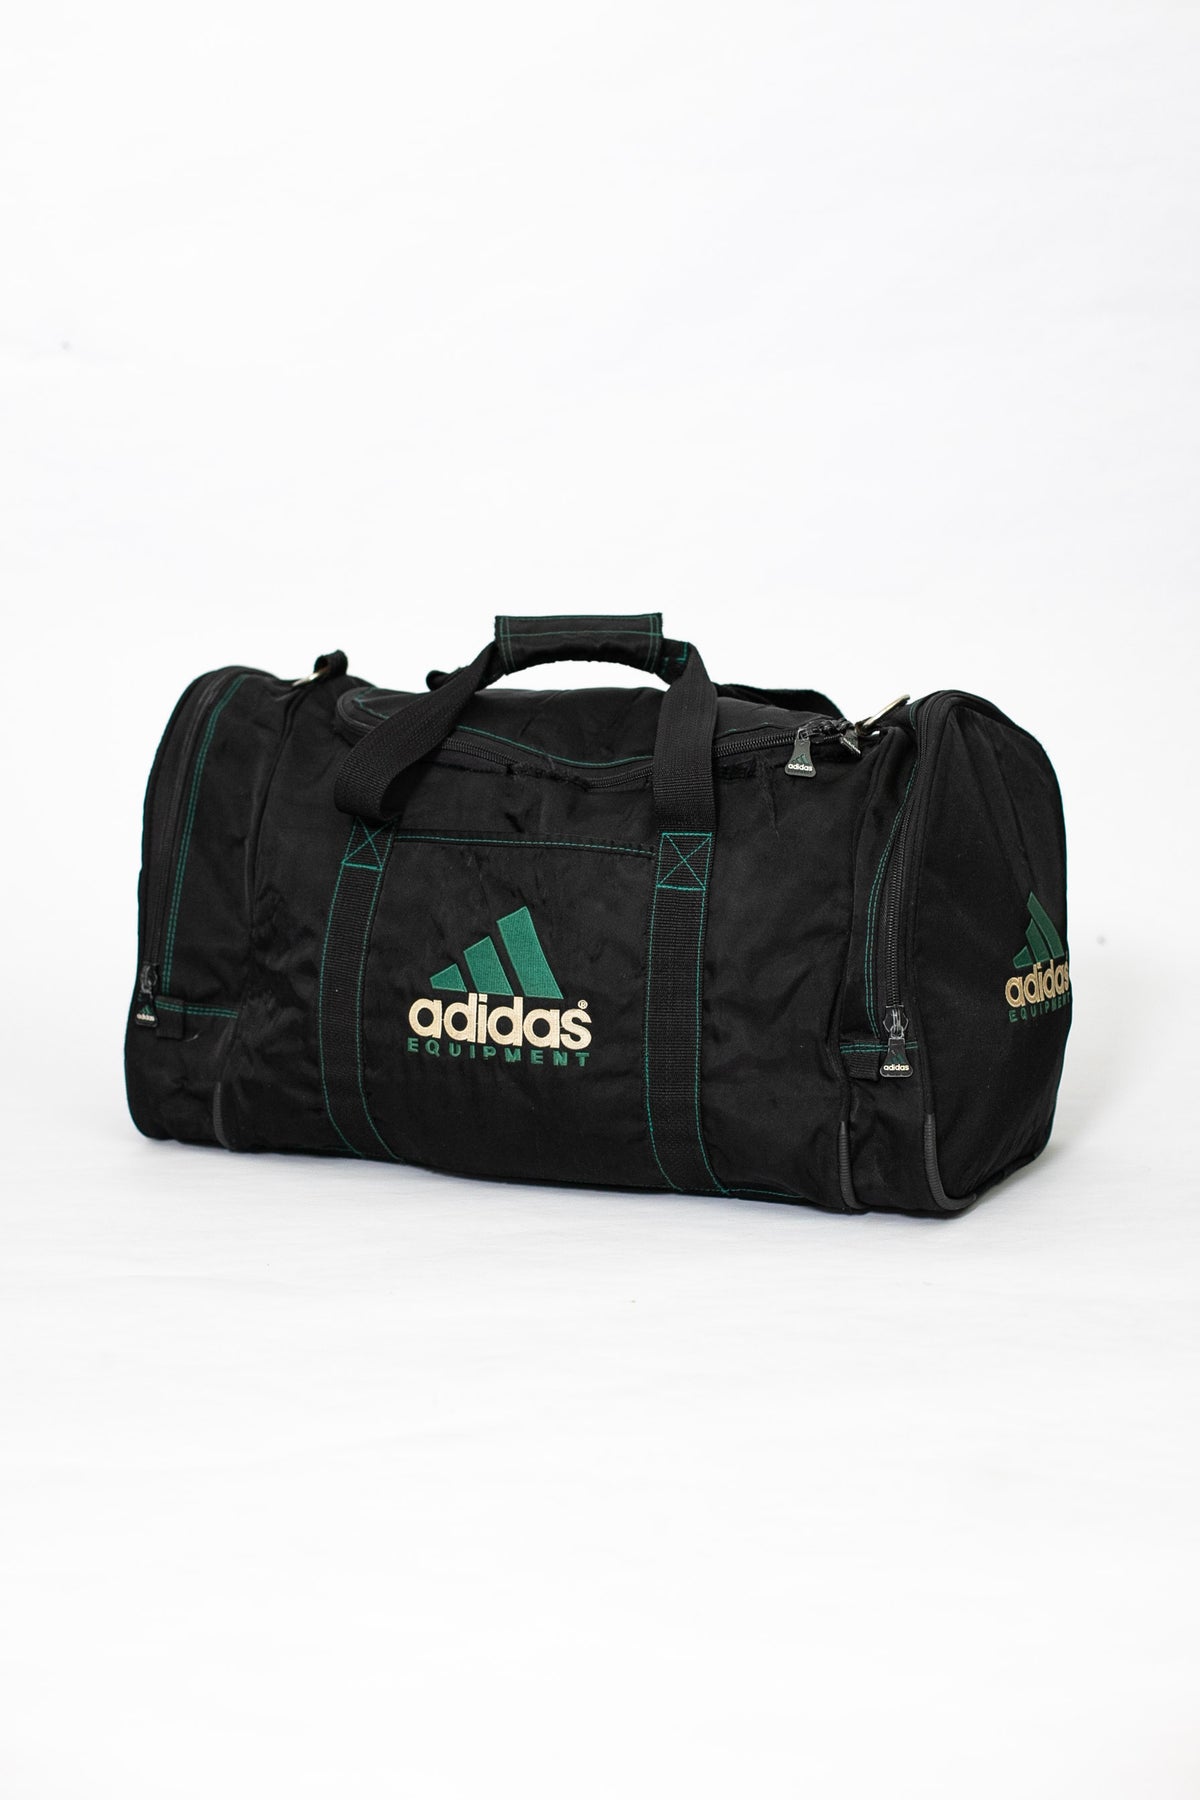 90s Adidas Equipment Duffle Bag